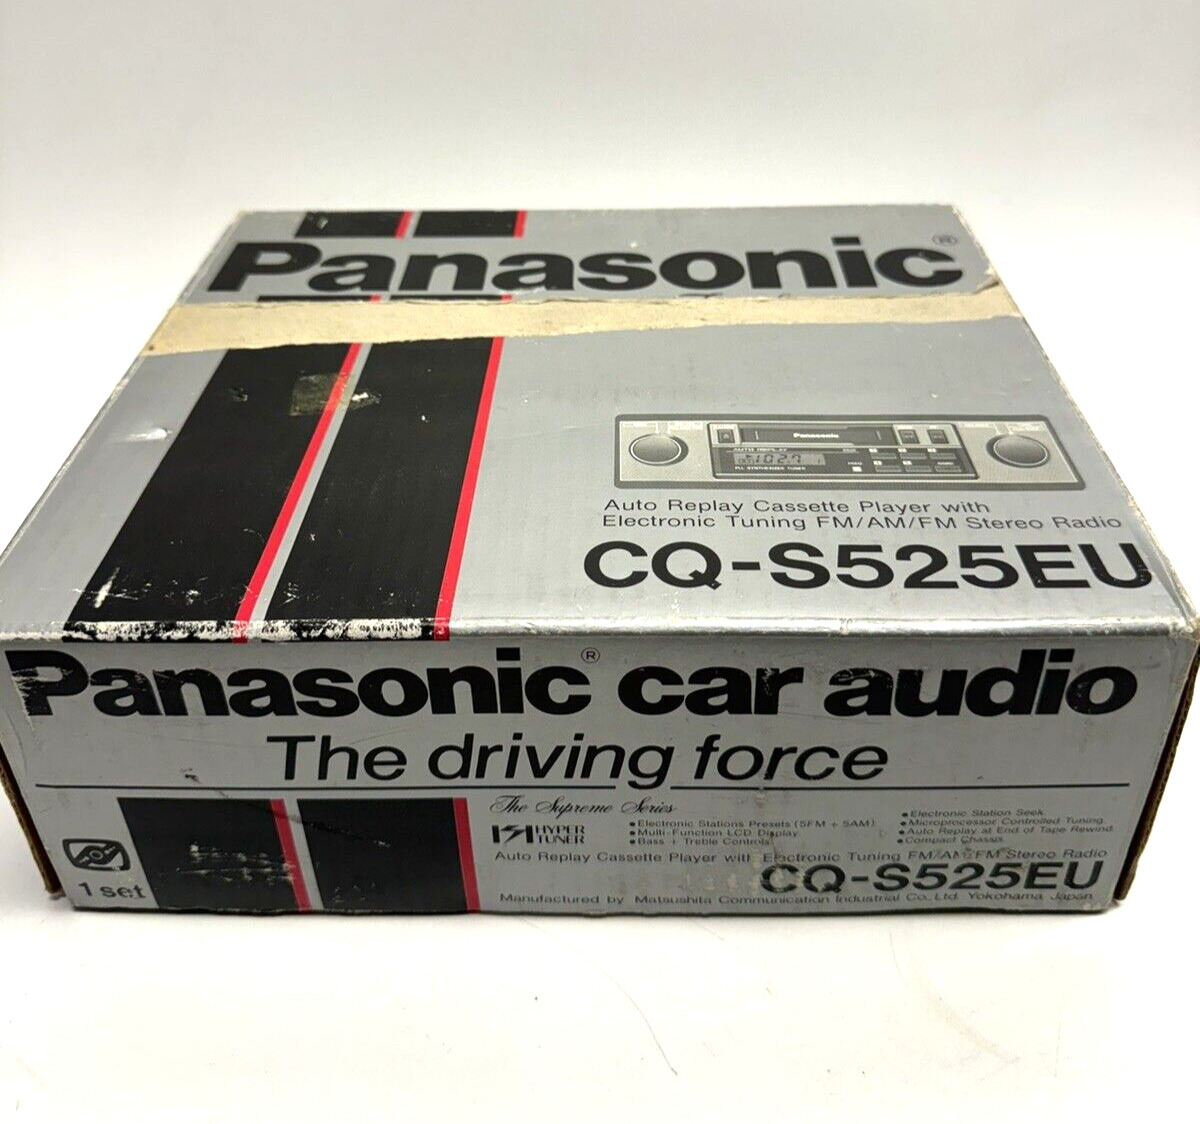 VINTAGE NOS Panasonic Car Audio AM/FM Stereo CQ-S525EU Made in Japan